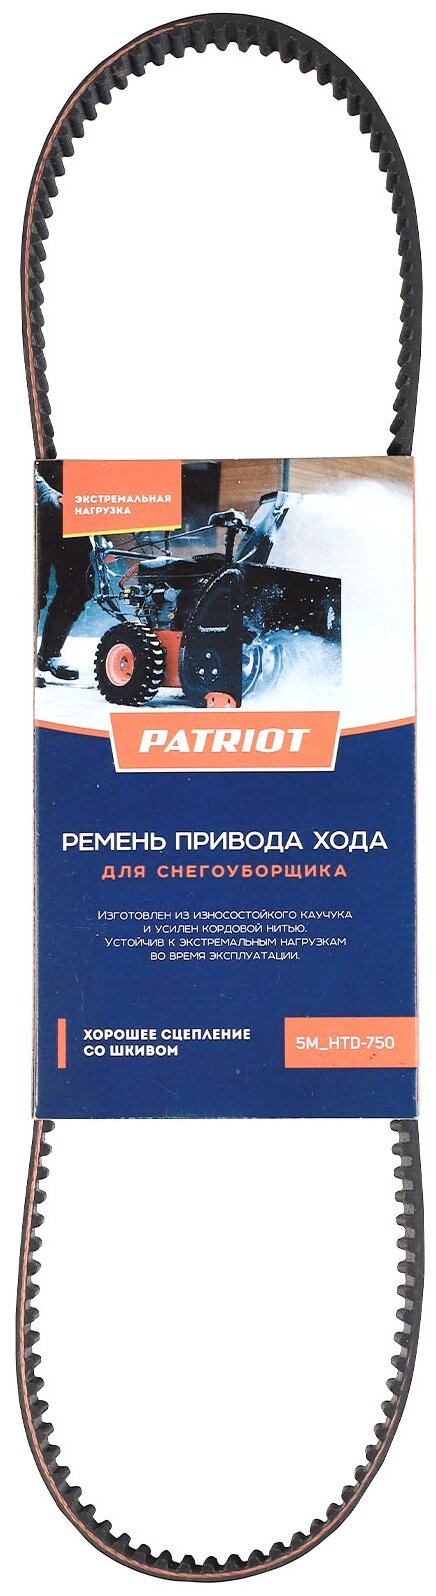 Patriot Ремень 5M_HTD-750 привода хода для снегоуборщика 426009221 .